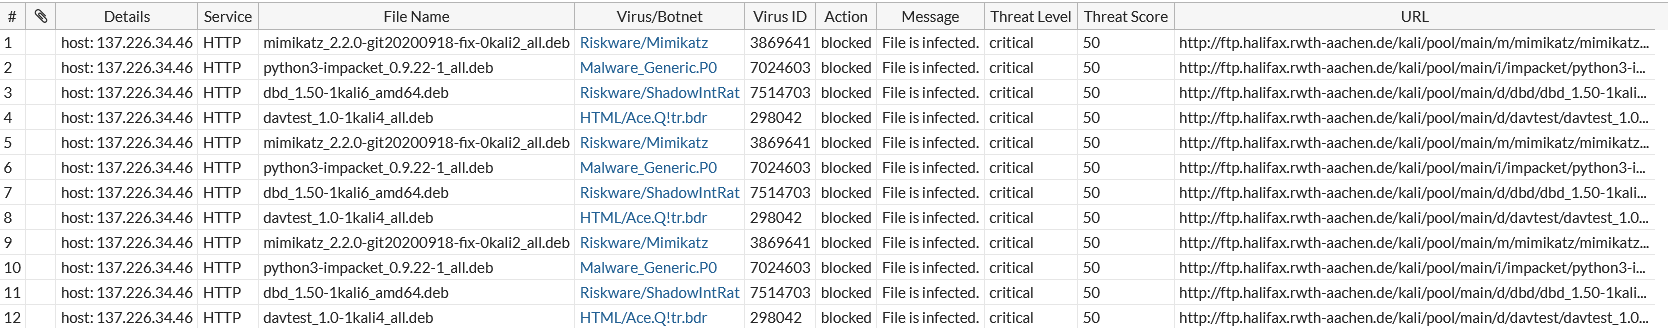 FortiGate antivirus kali update